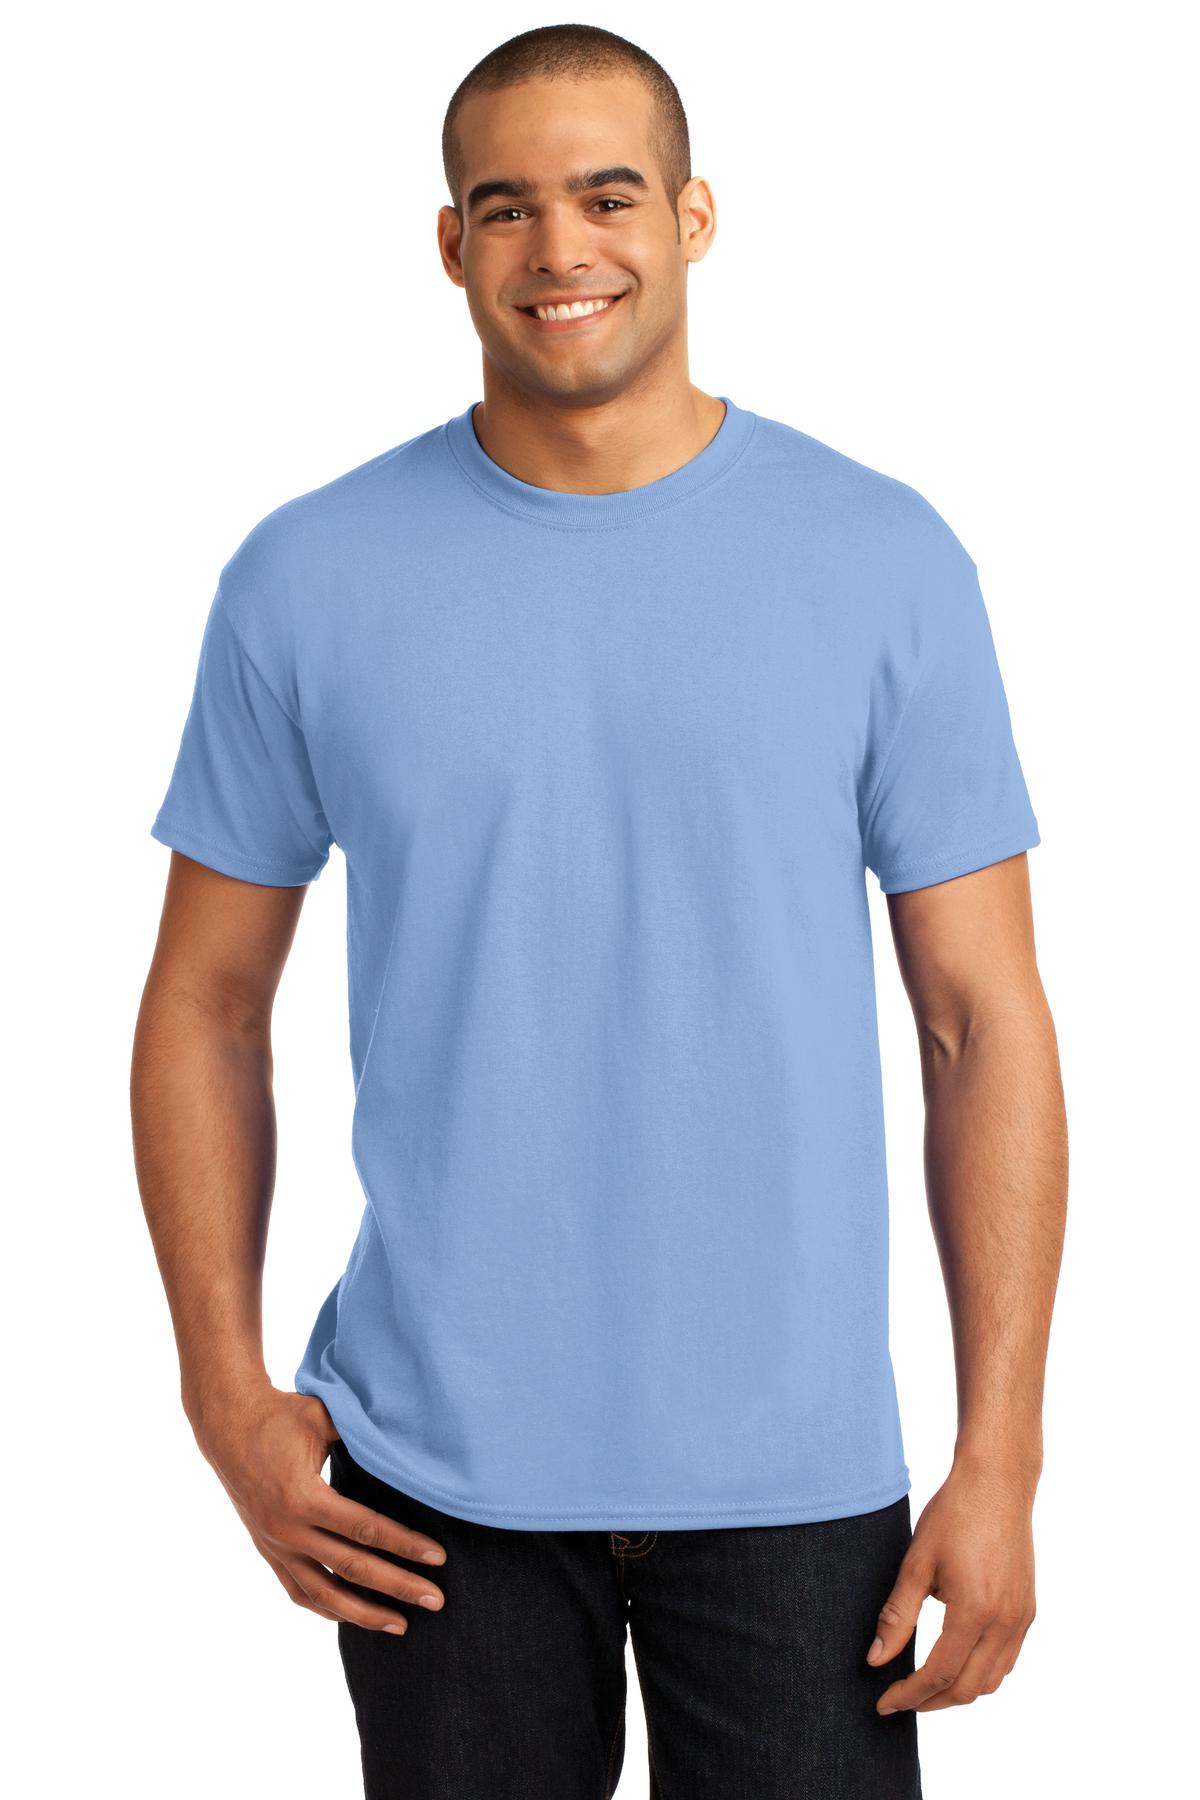 Hanes® - EcoSmart® 50/50 Cotton/Poly T-Shirt. 5170 [Light Blue] - DFW Impression